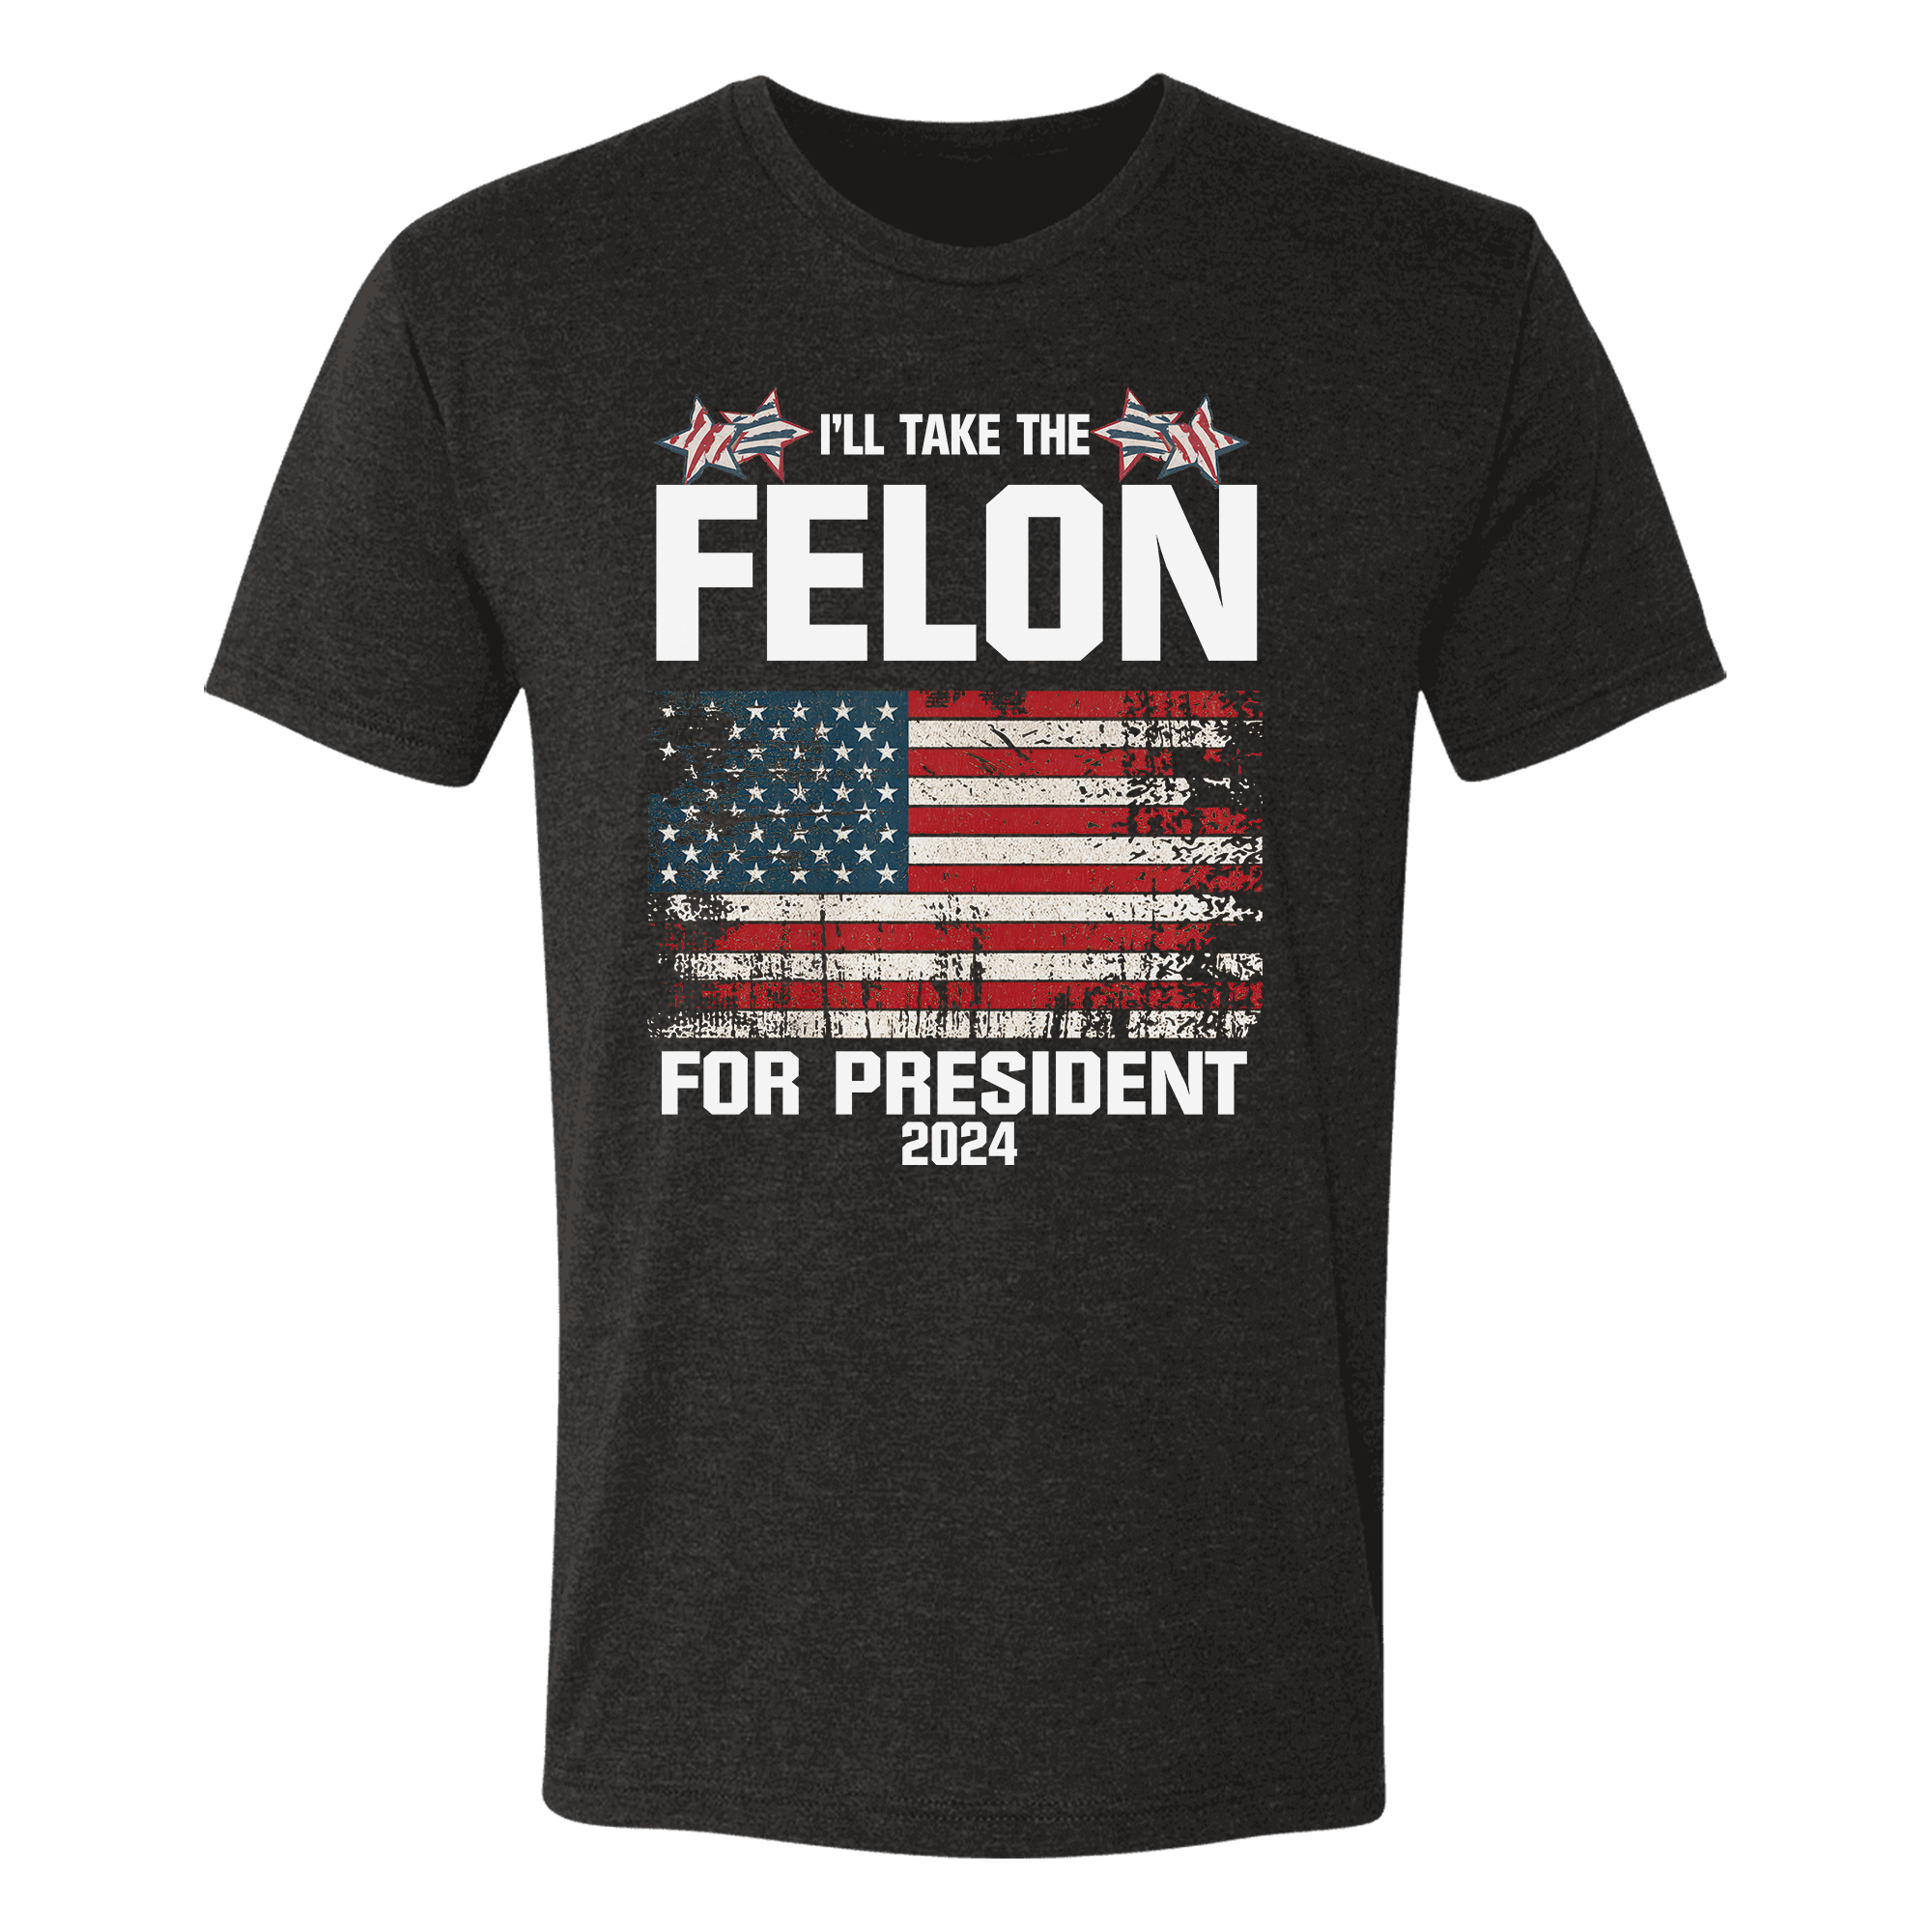 Felon for President 2024, Patriot Shirt, USA Flag Shirt - GB69